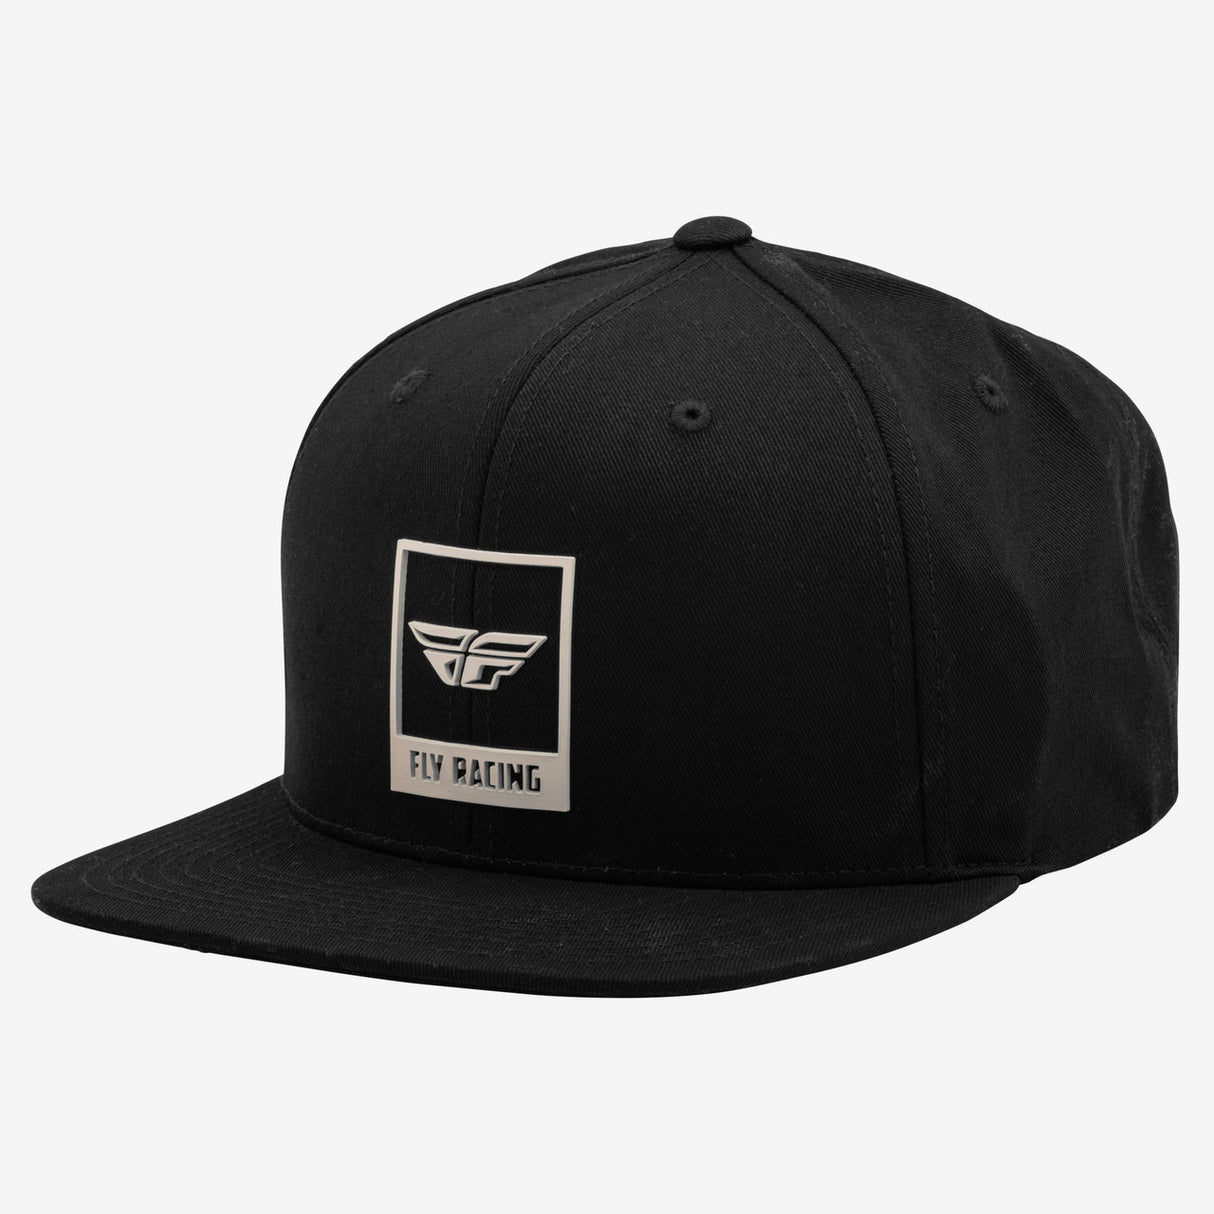 Fly Racing Boss Hat - Black/White